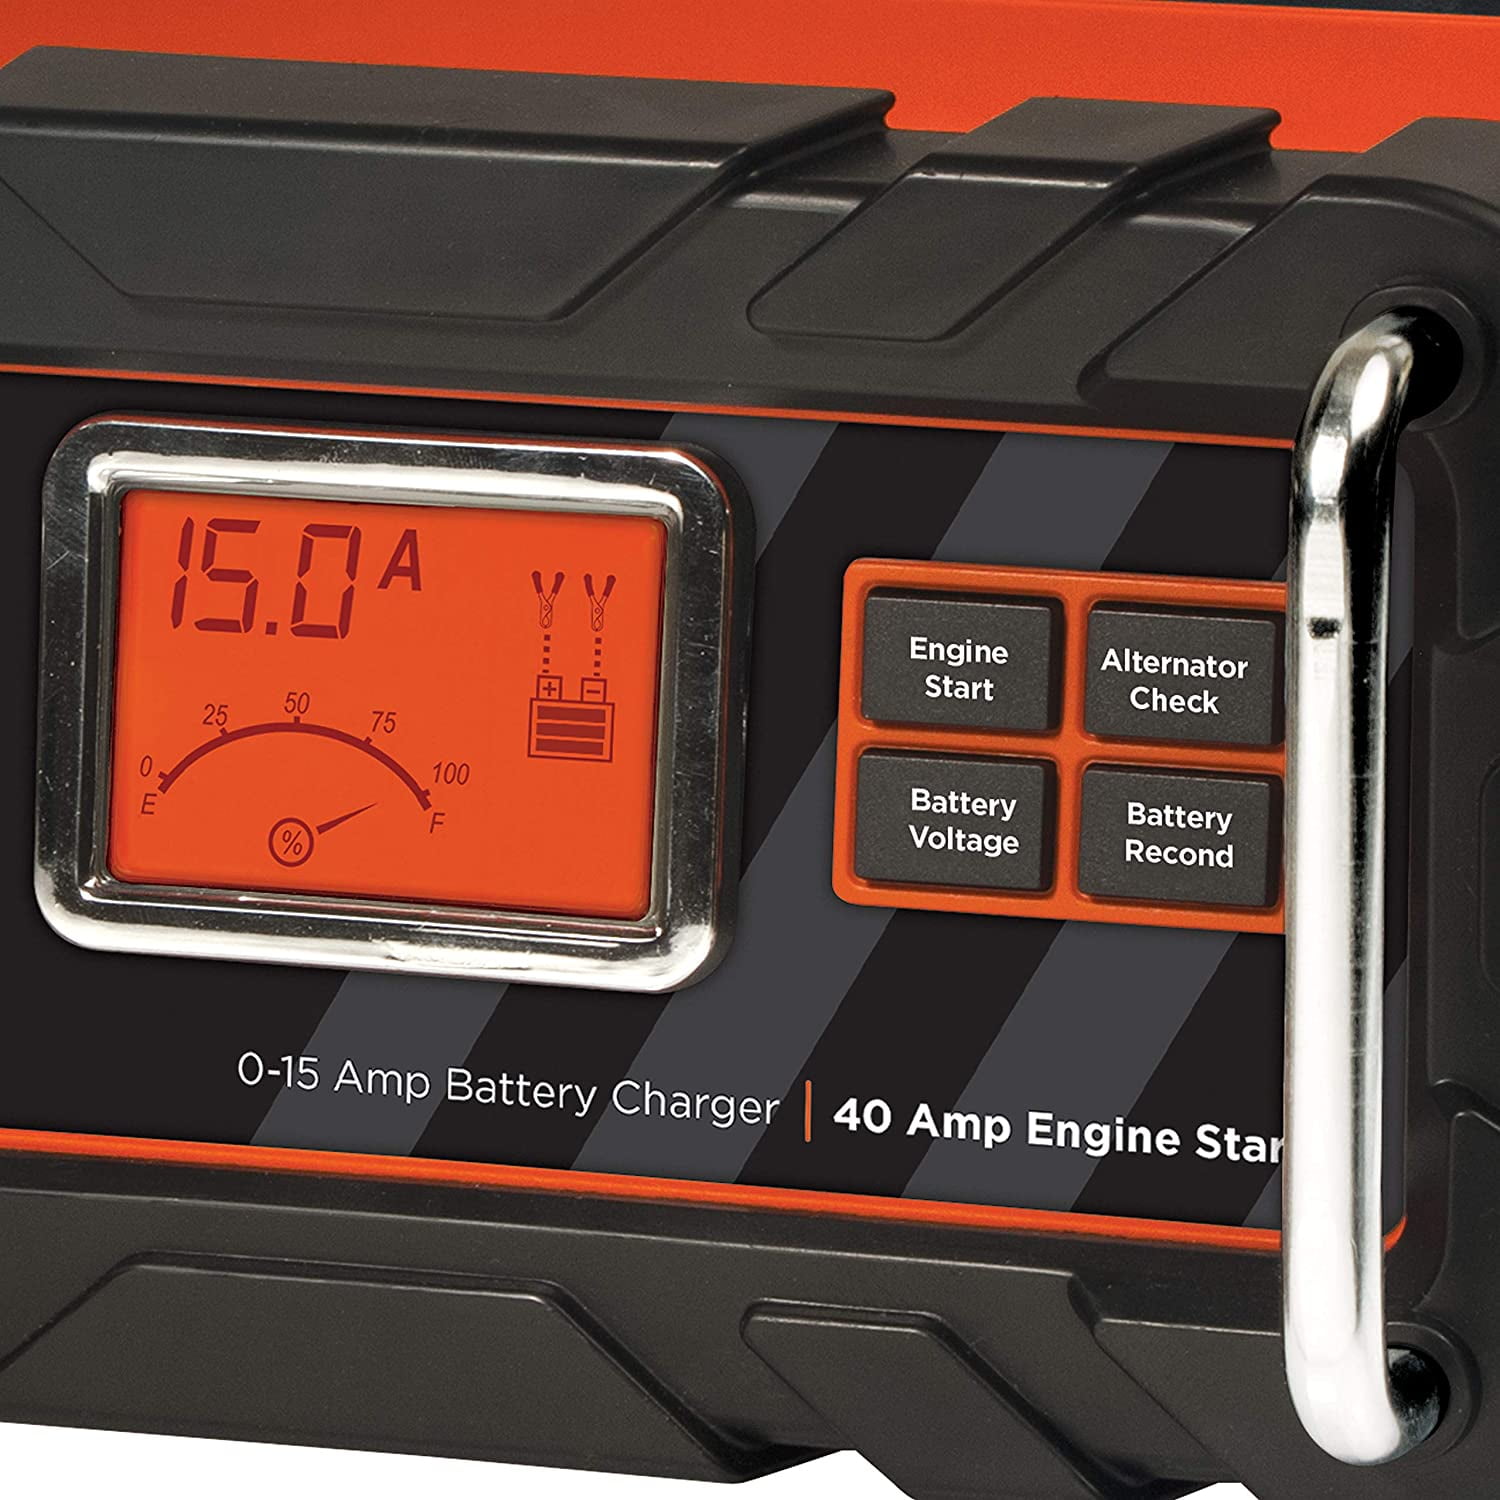 BLACK & DECKER 10-Amp Smart Car Battery Charger at